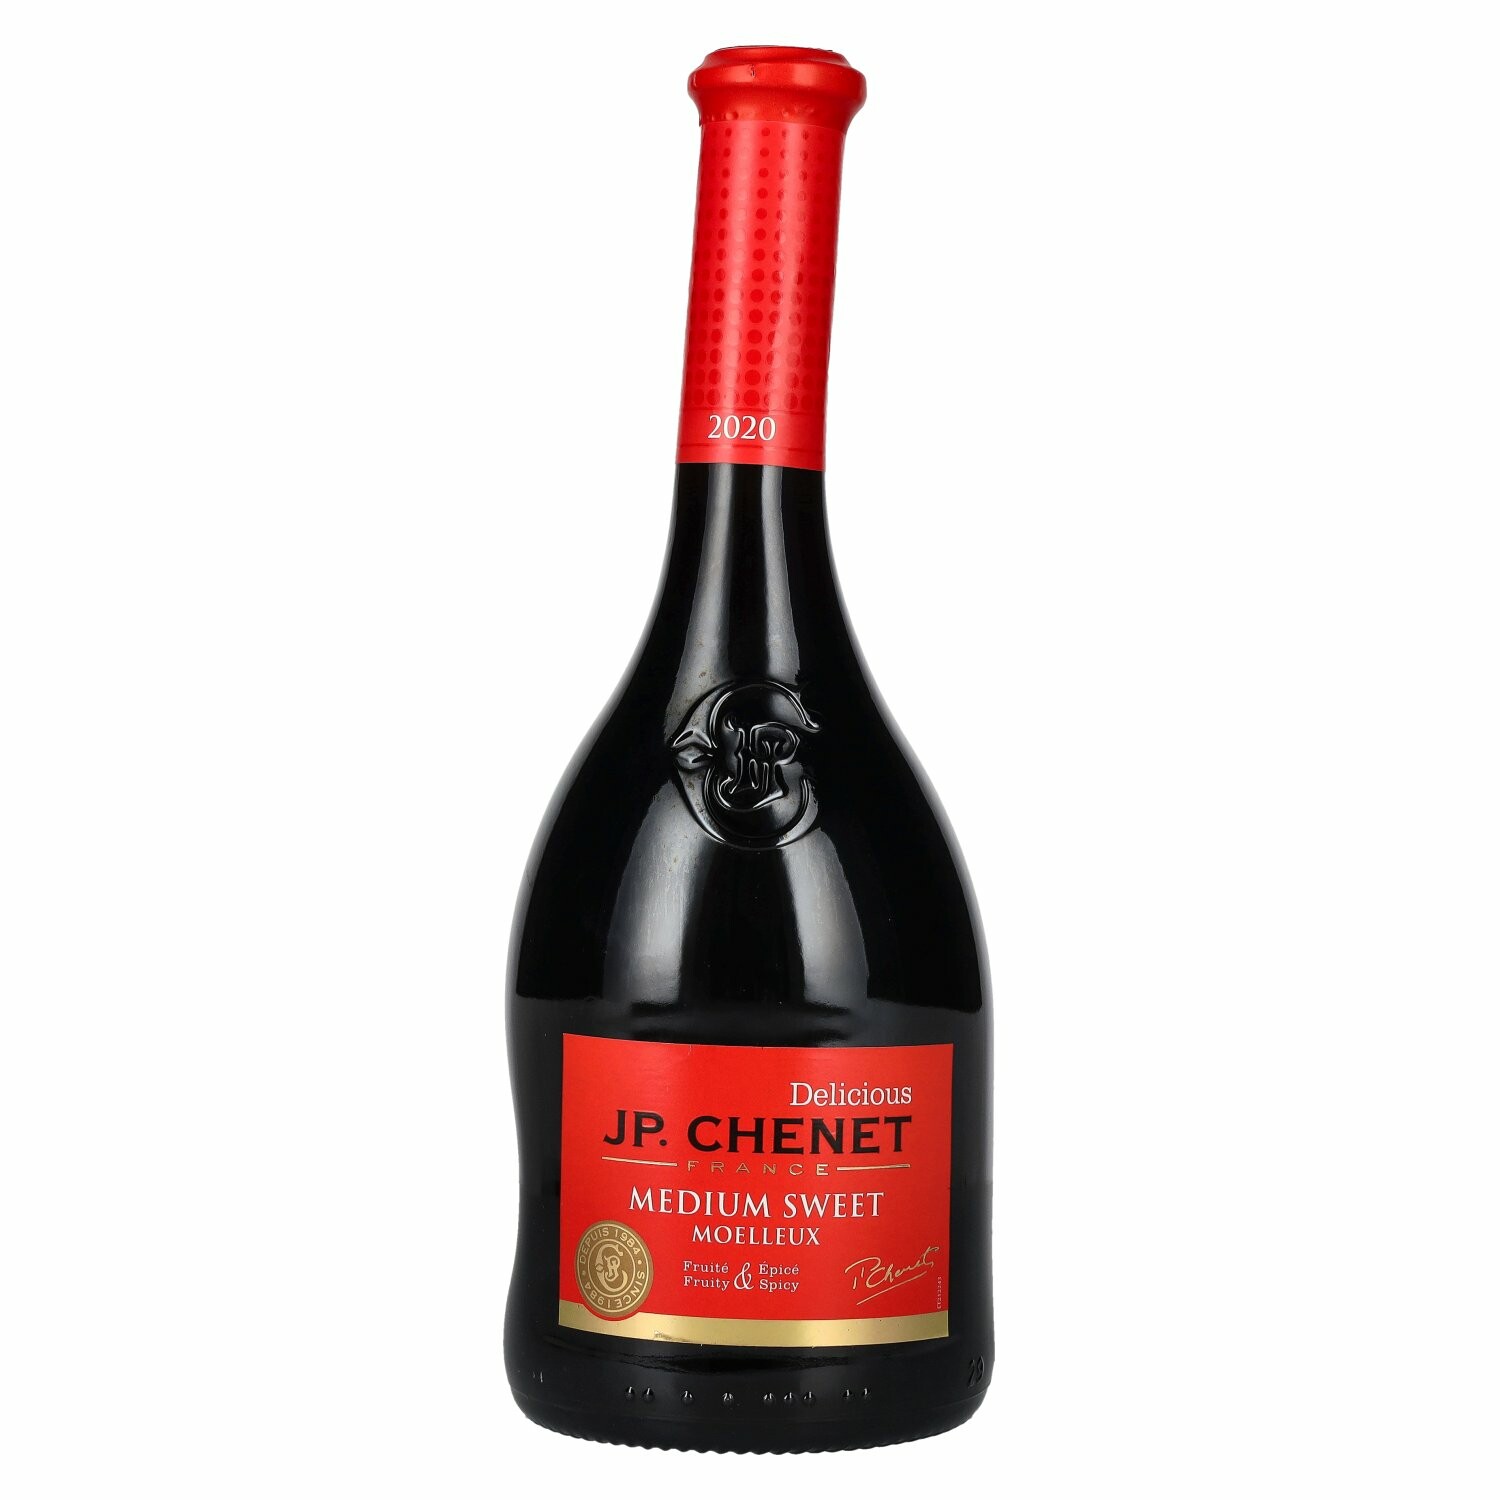 JP. Chenet Delicious MEDIUM SWEET Moelleux Rouge 2020 13% Vol. 0,75l